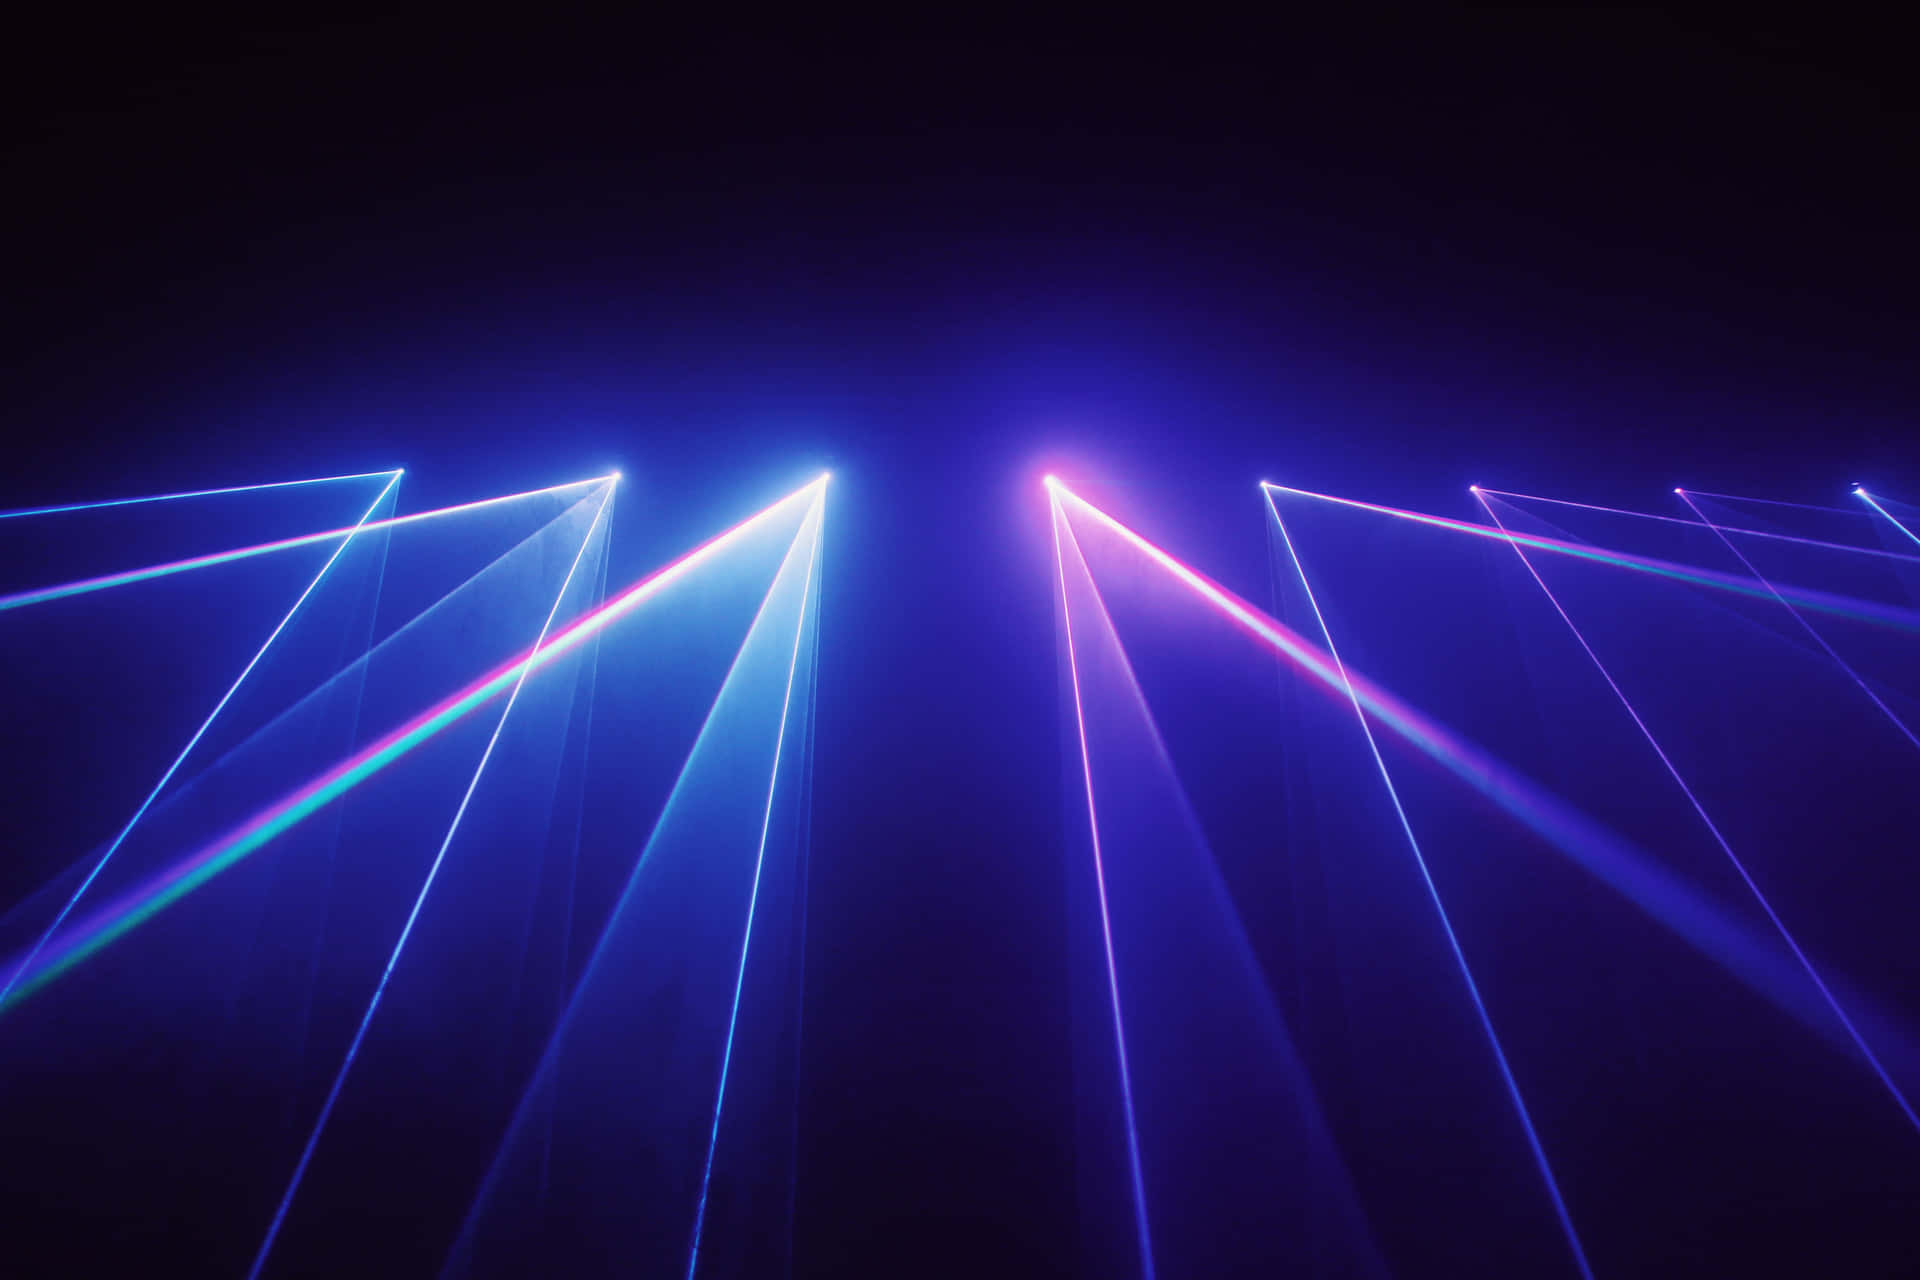 Laser beams blasting into the night sky